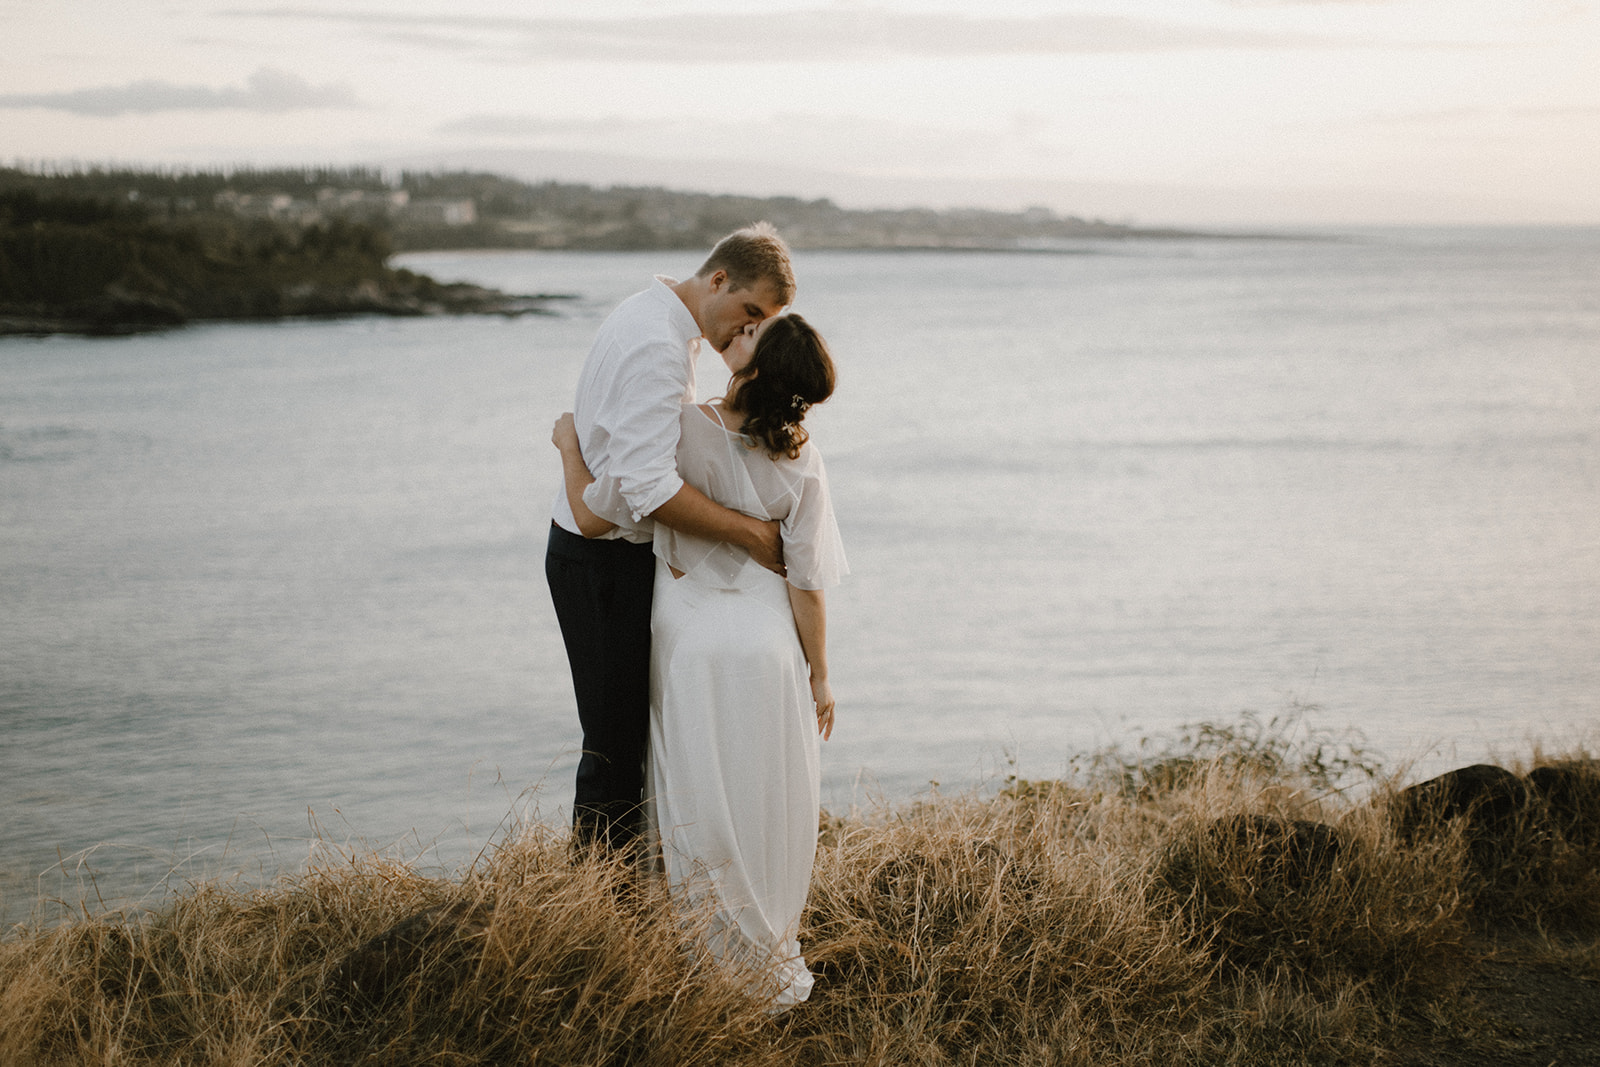 Maui Hawaii intimate elopement photographer